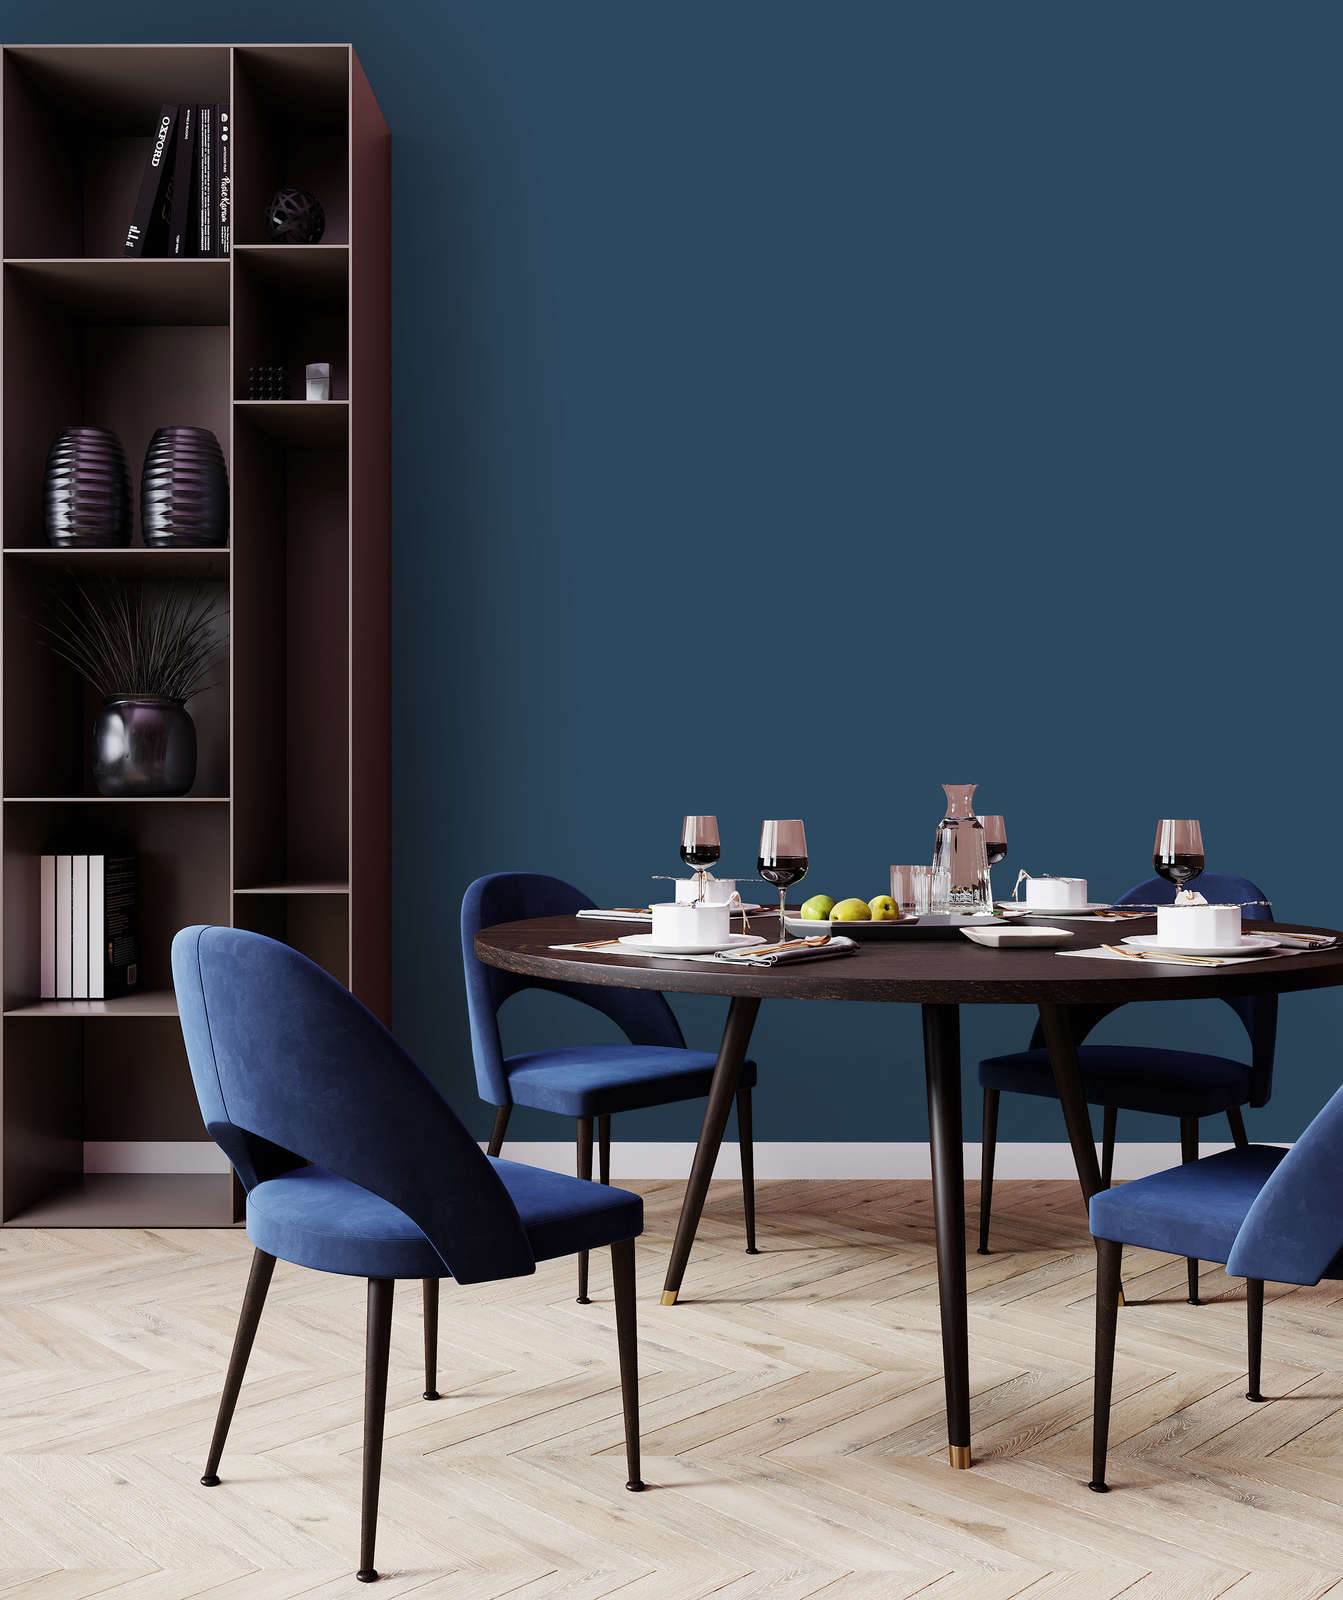             Premium Wall Paint noble dark blue »Blissful Blue« NW308 – 1 litre
        